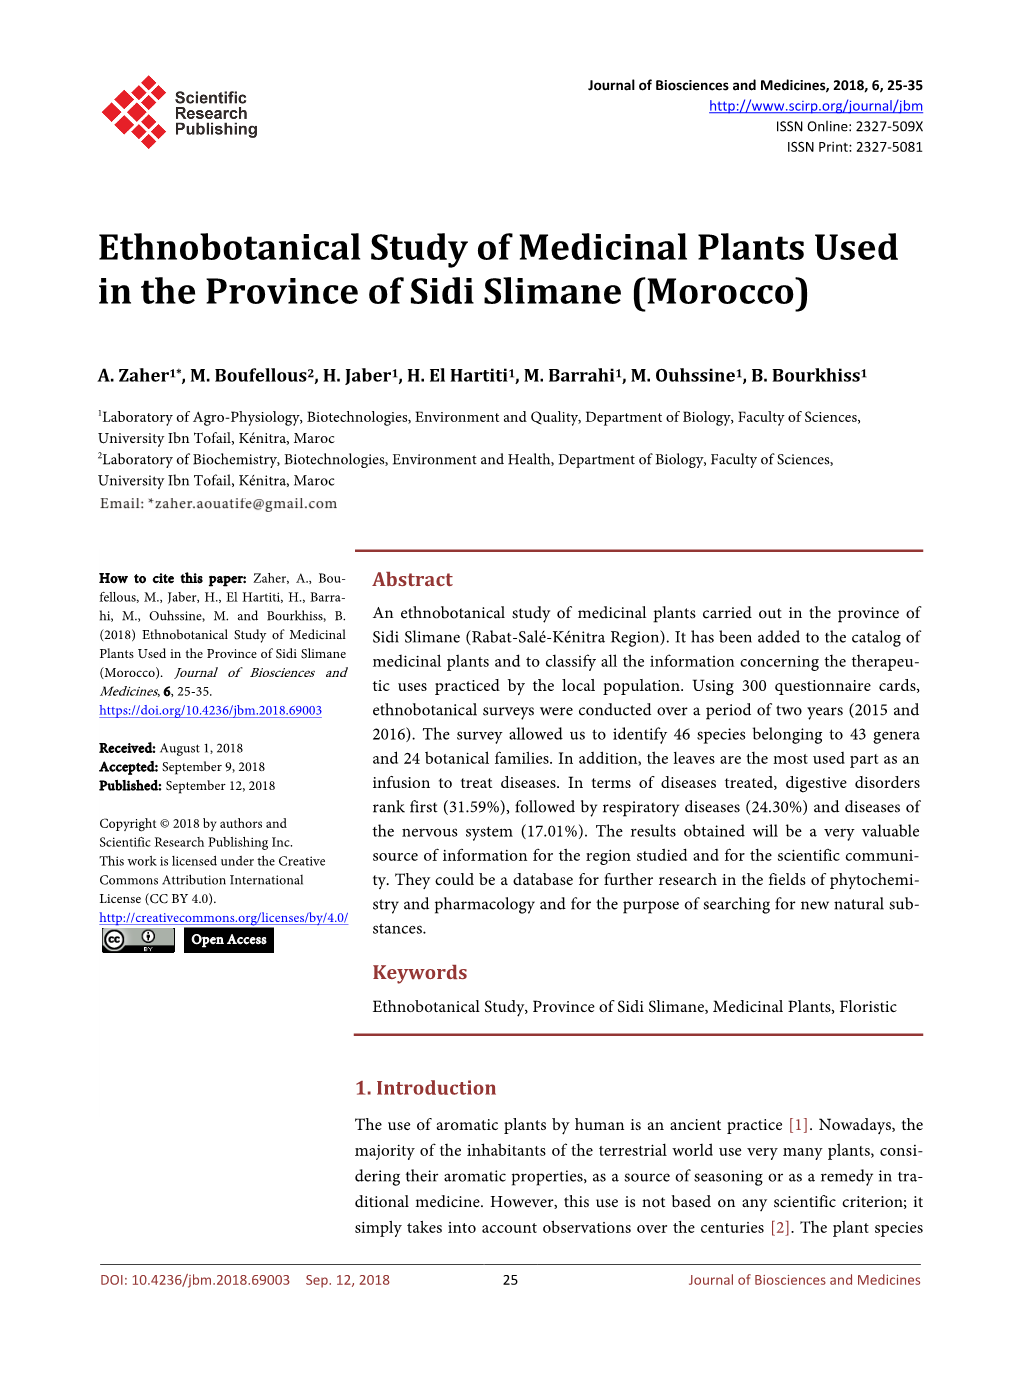 Ethnobotanical Study of Medicinal Plants Used in the Province of Sidi Slimane (Morocco)